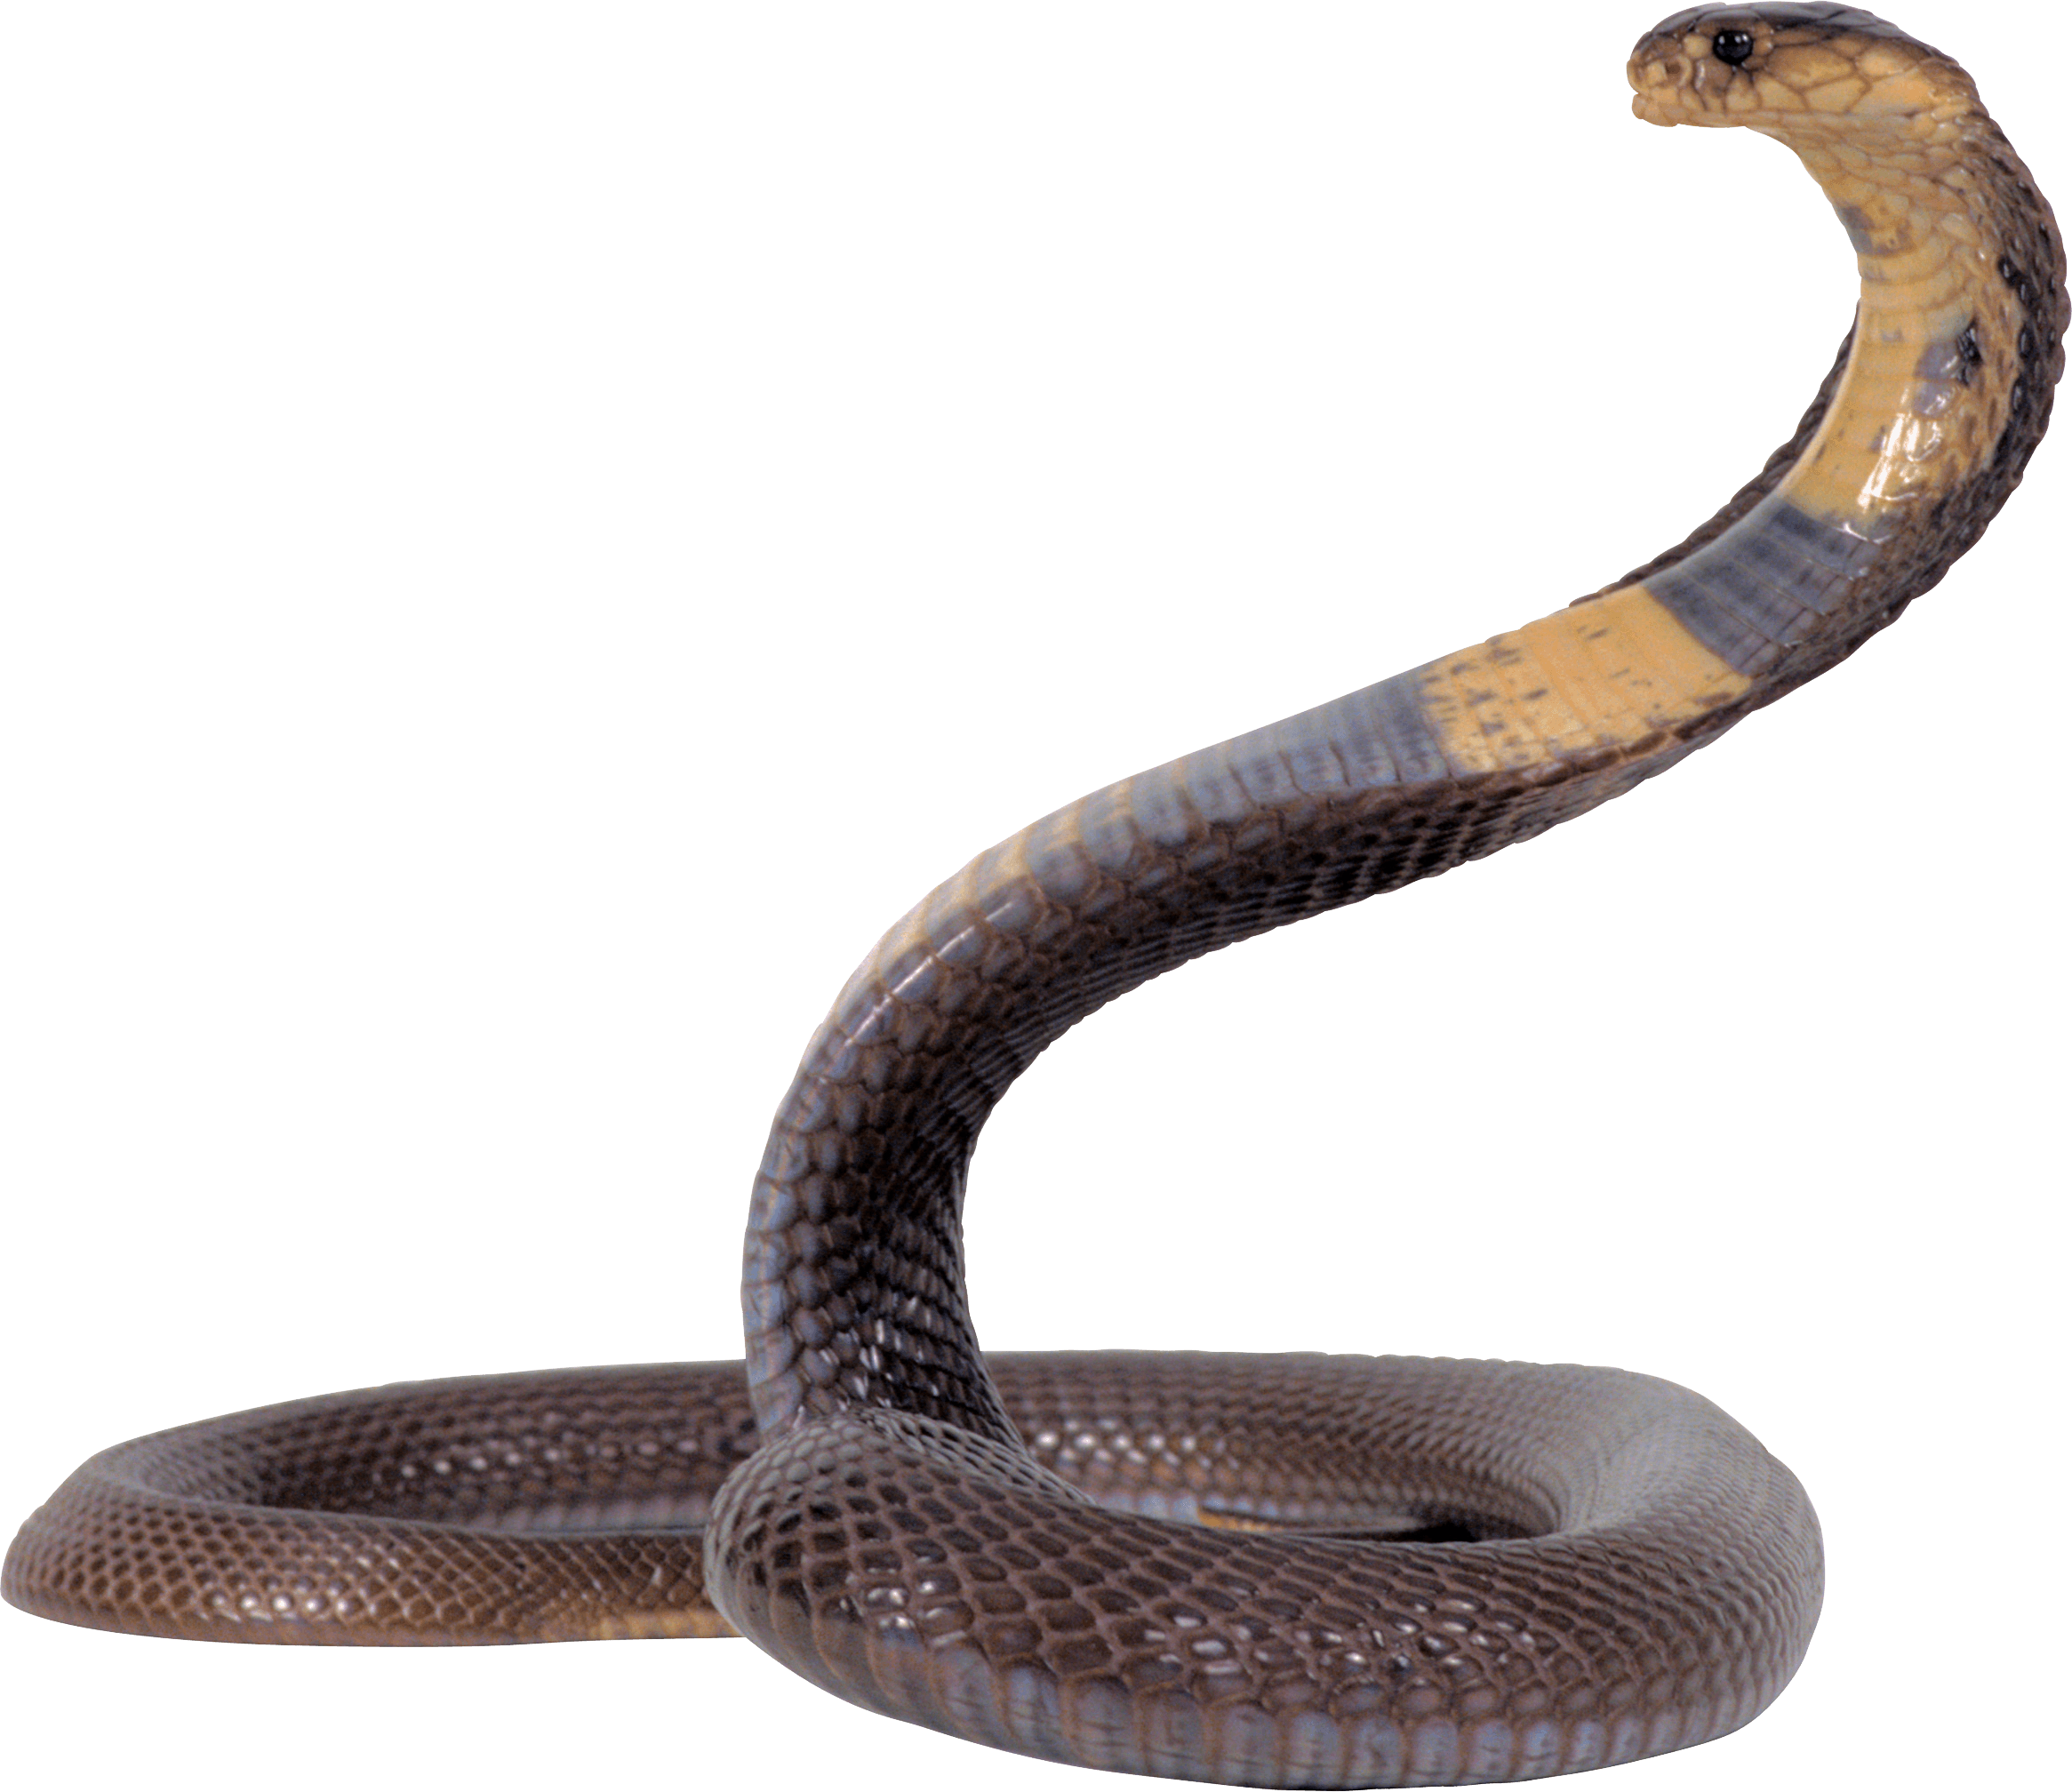 Cobra Snake Png Image Download Picture PNG Image